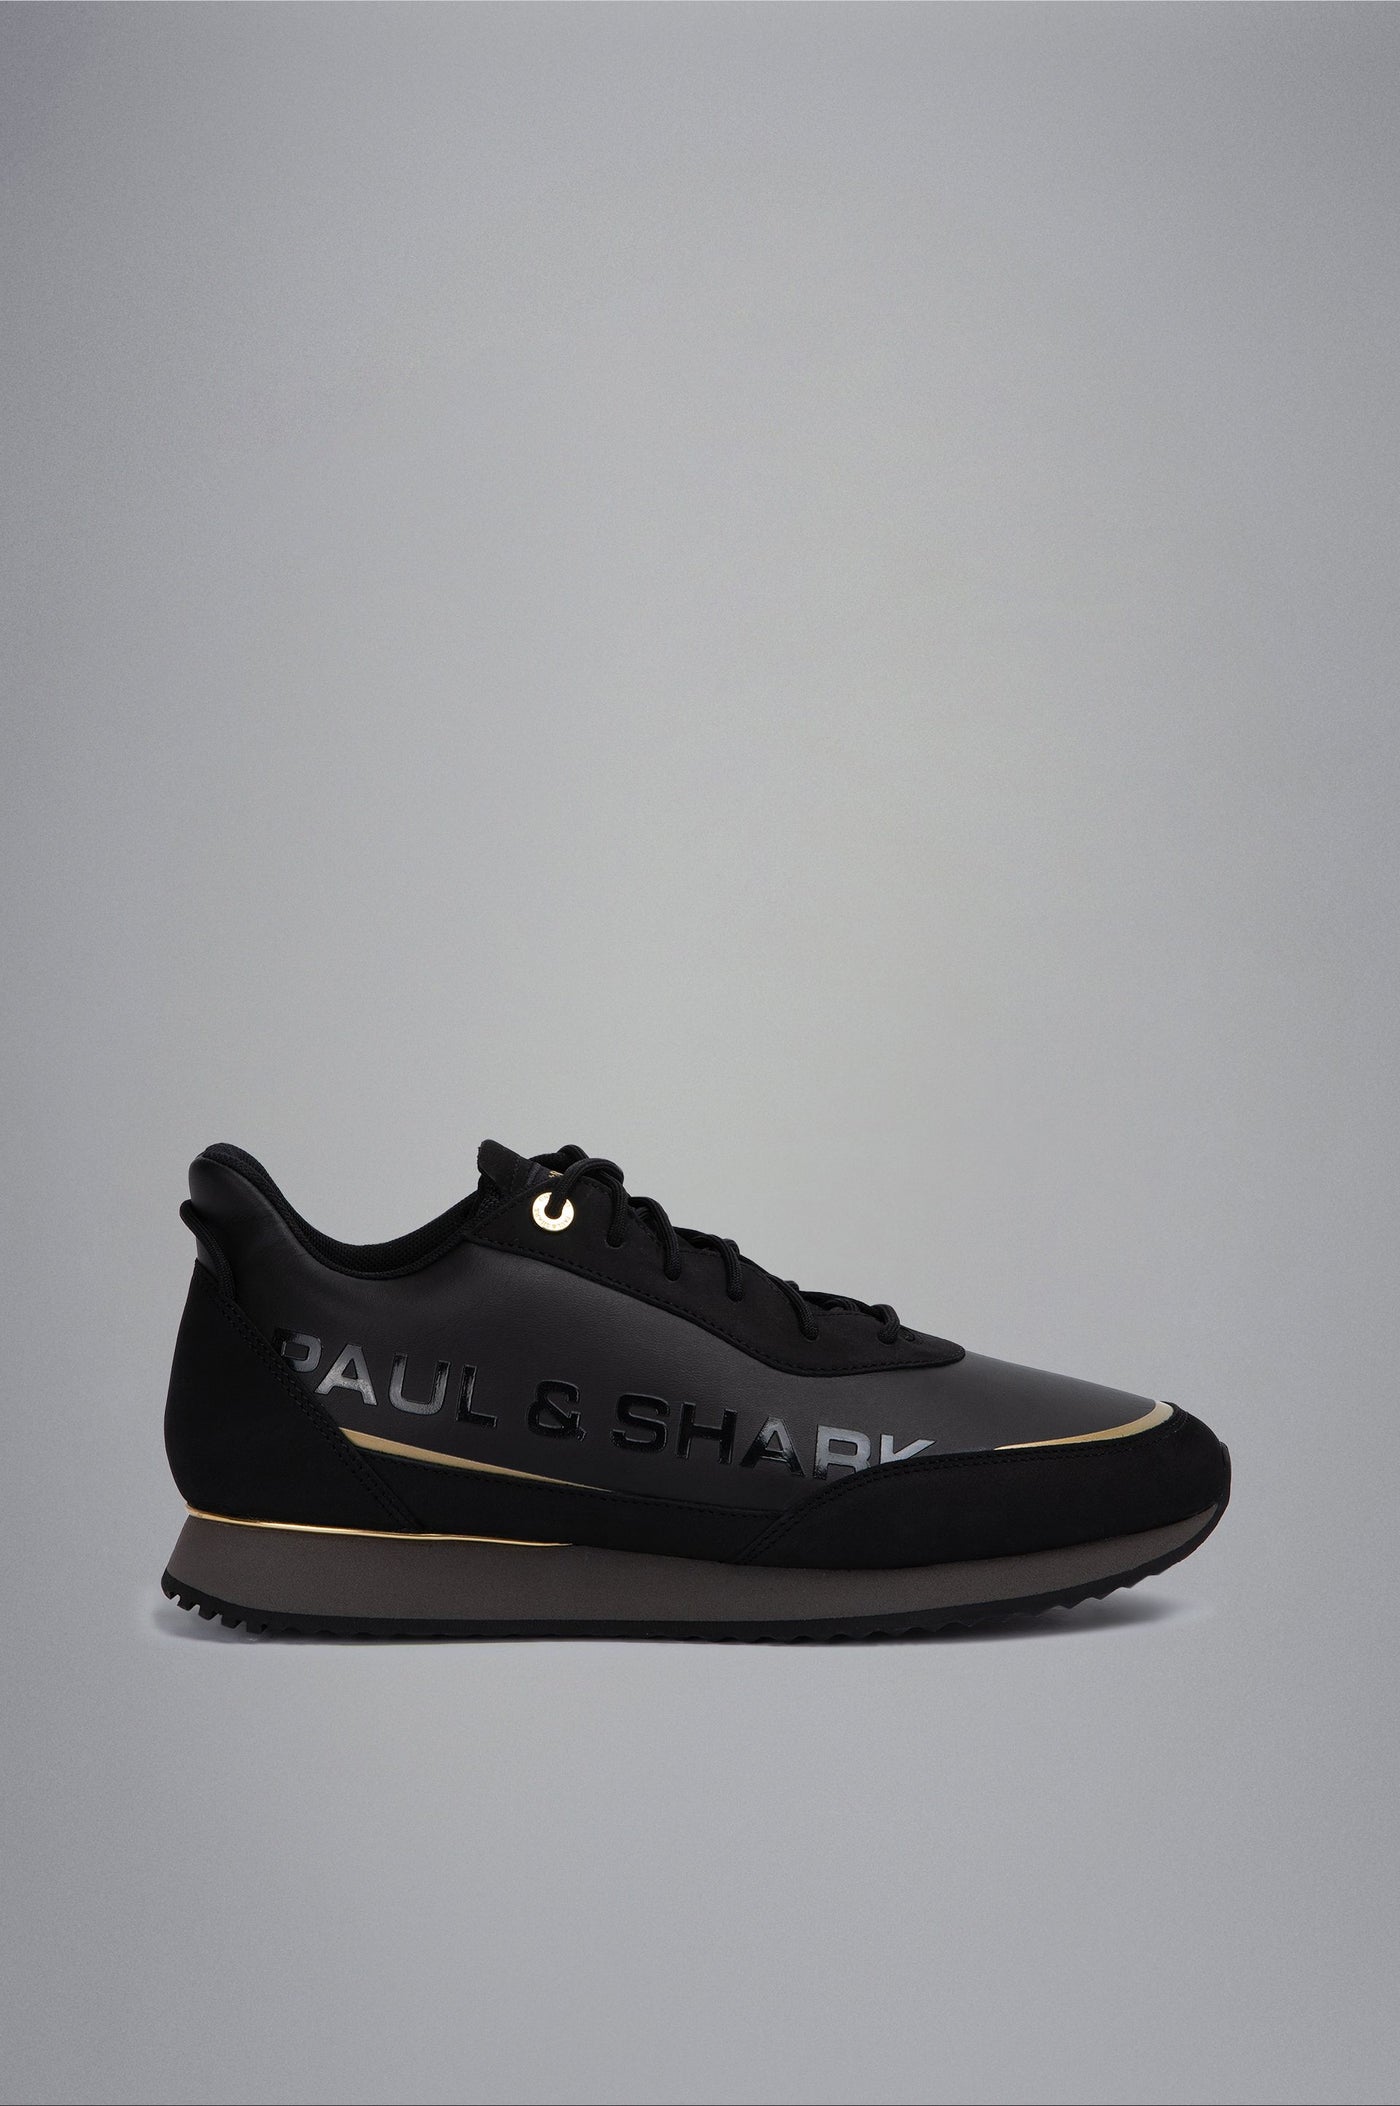 Paul & Shark Hybrid Sneakers | Black